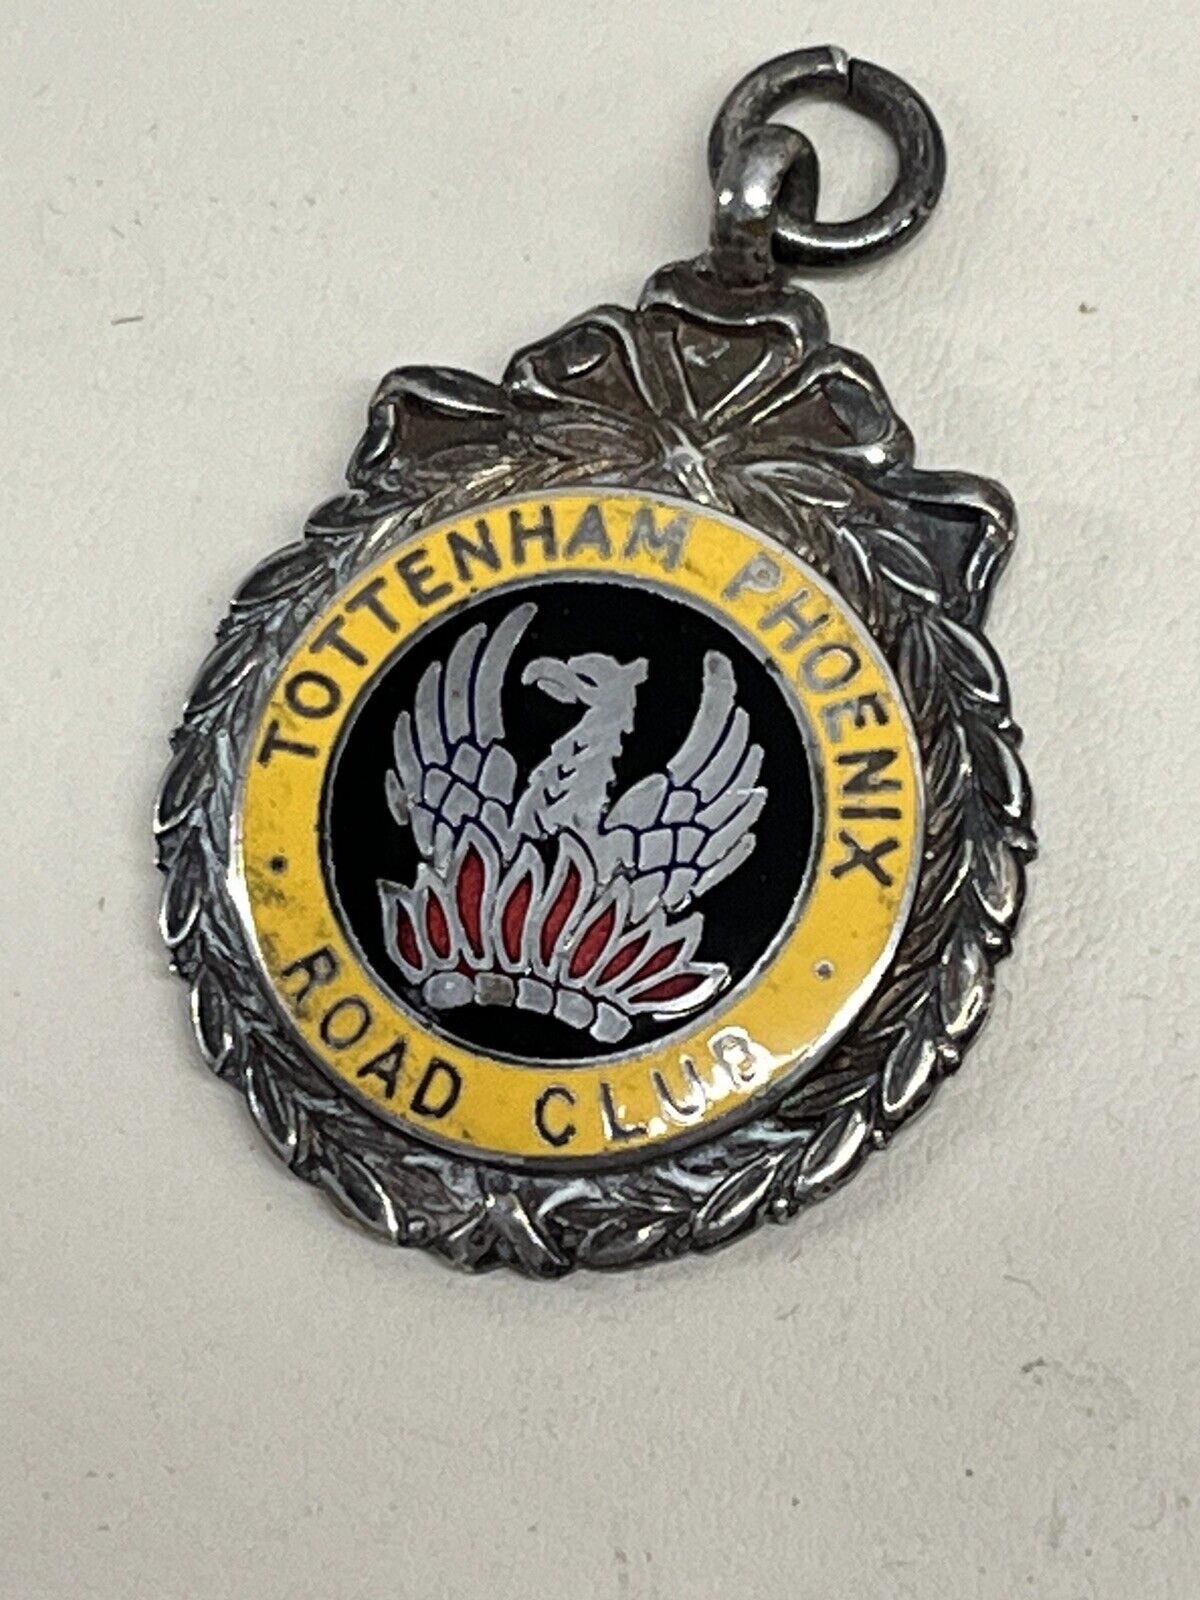 Tottenham Phoenix Road Club Cycling Medal.